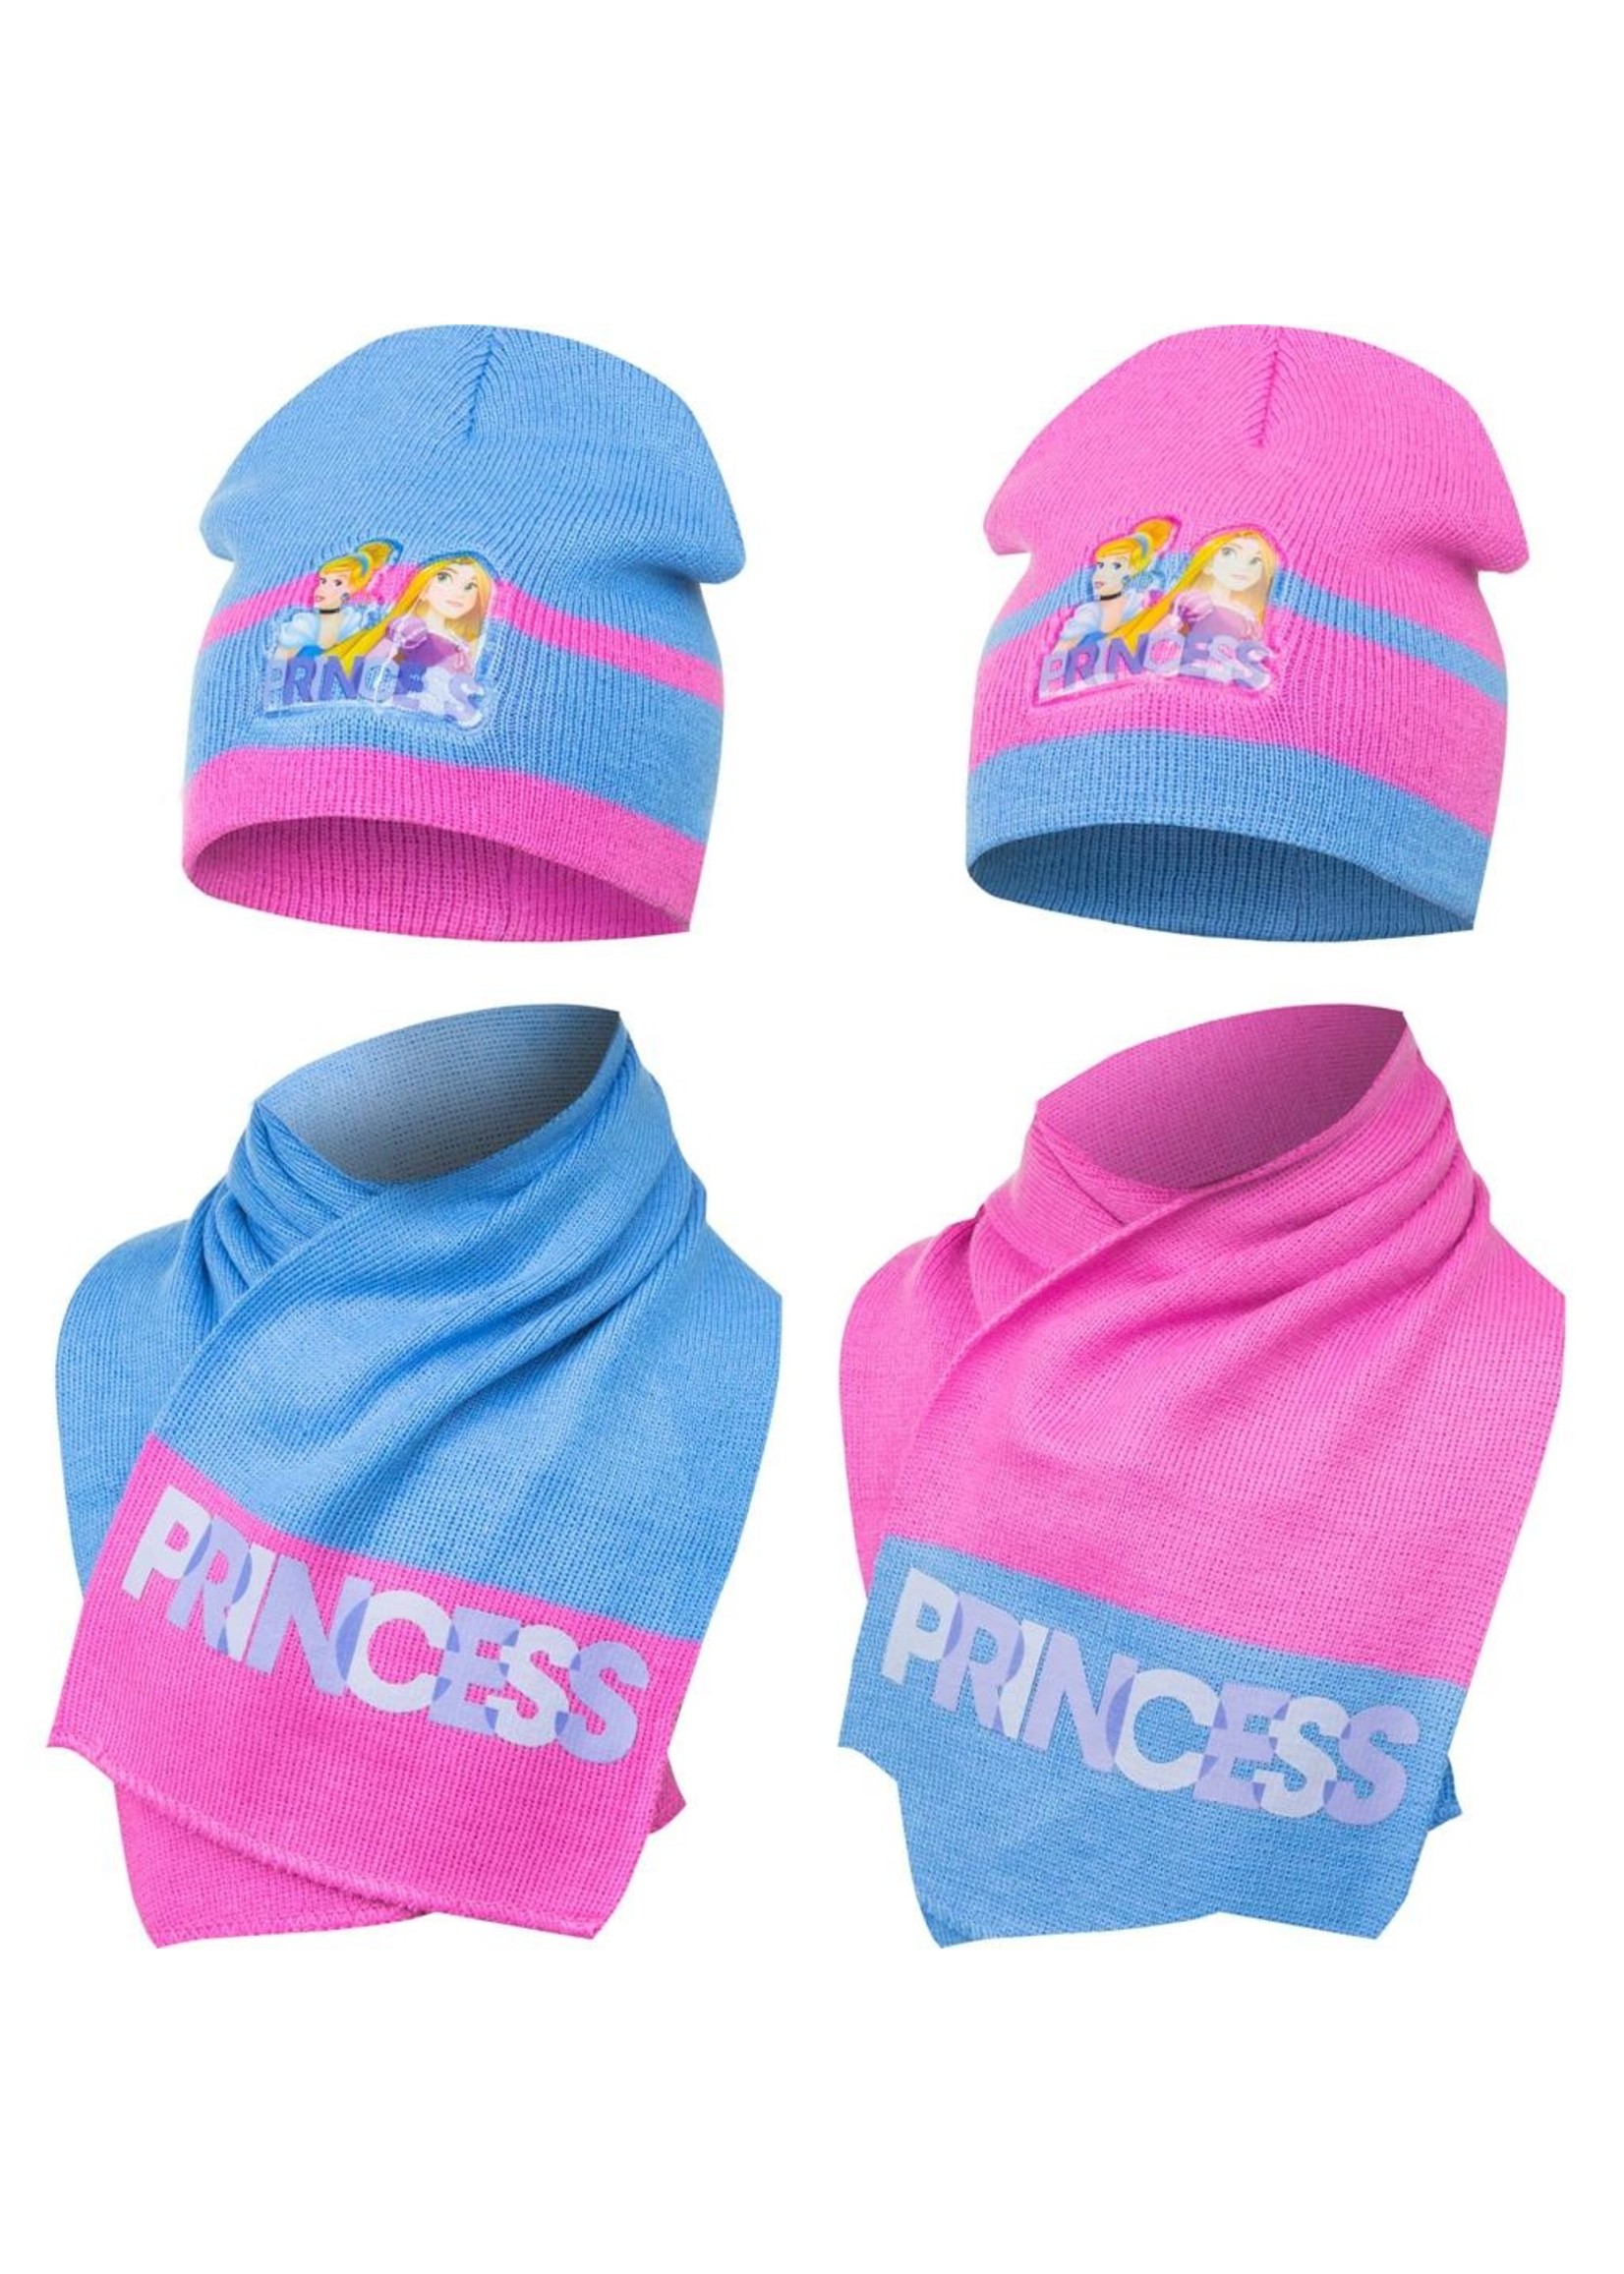 Disney Princess 2 piece winter set from Disney pink